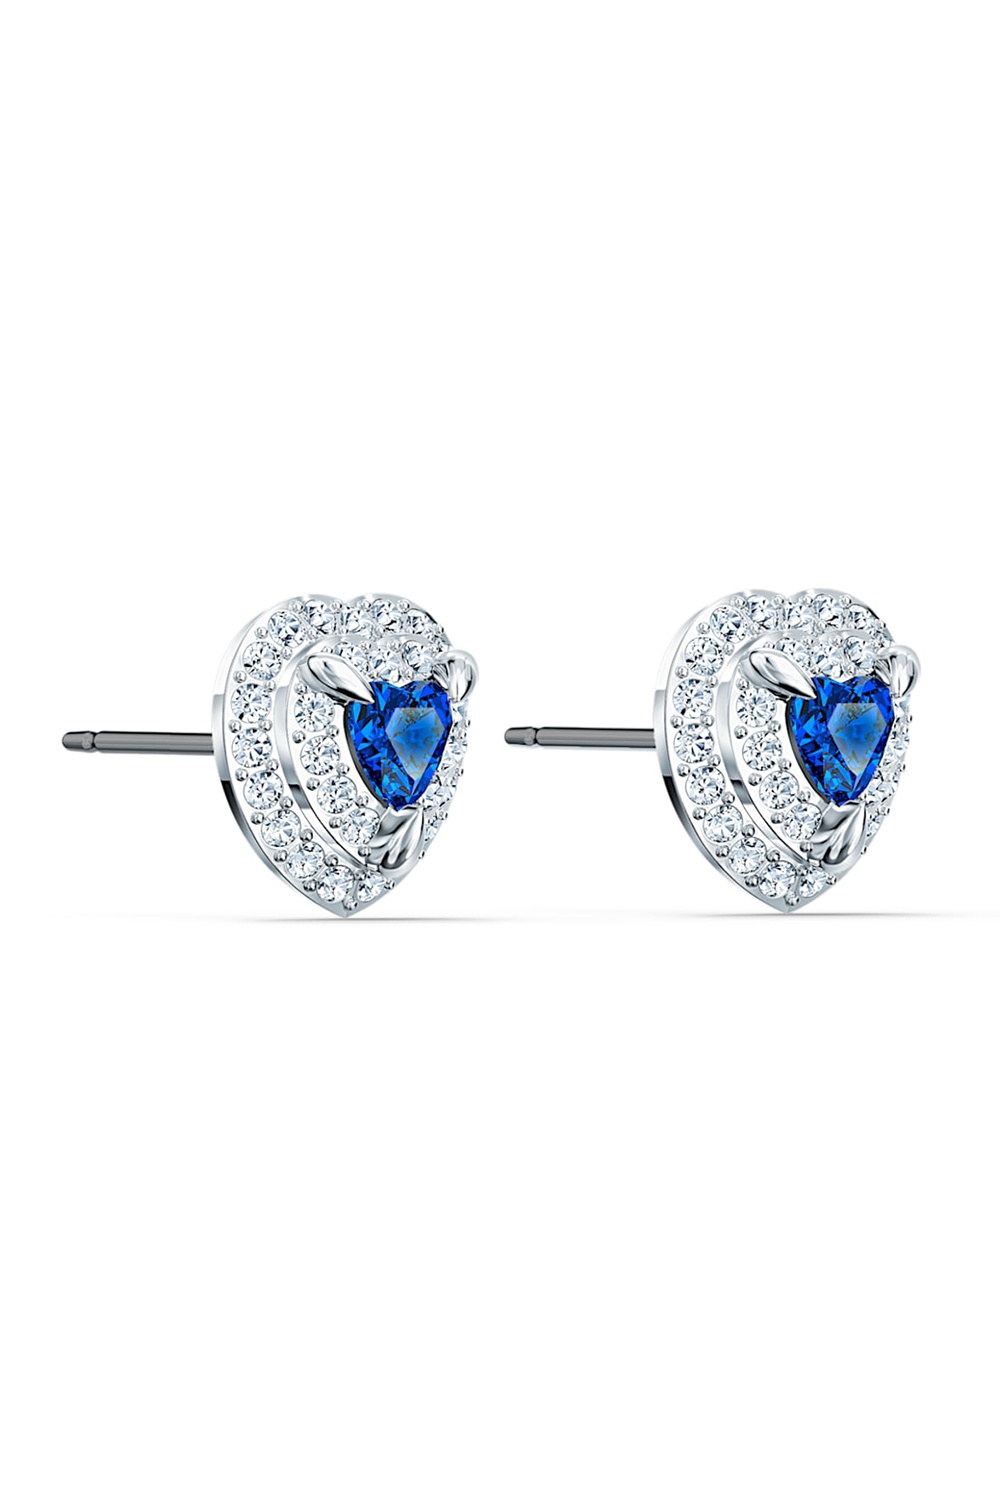 Swarovski One Stud Pierced Earrings, Blue, Rhodium Plated | Odel.lk